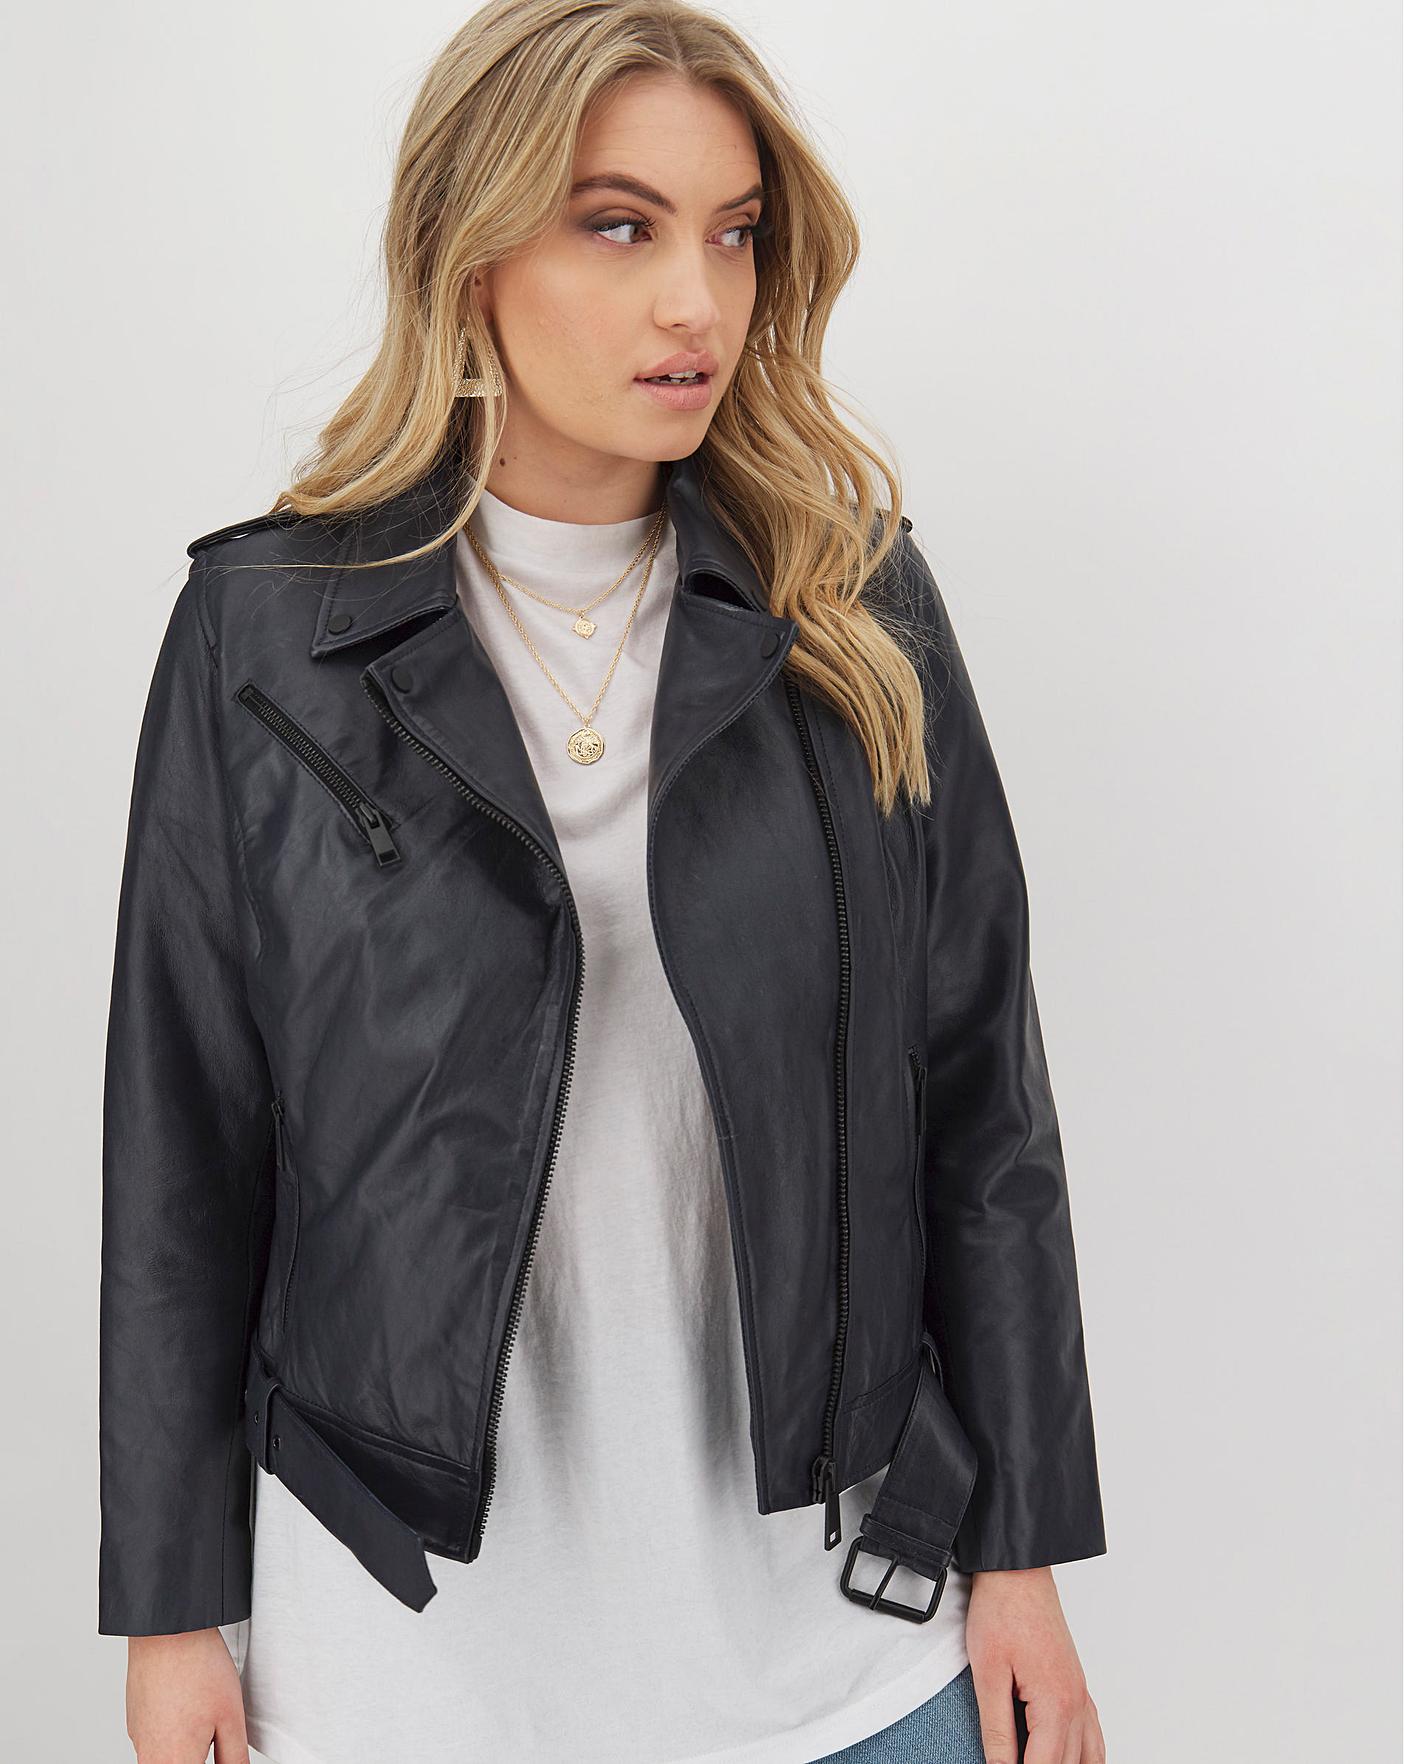 Joanna Hope Navy Leather Biker Jacket | Simply Be